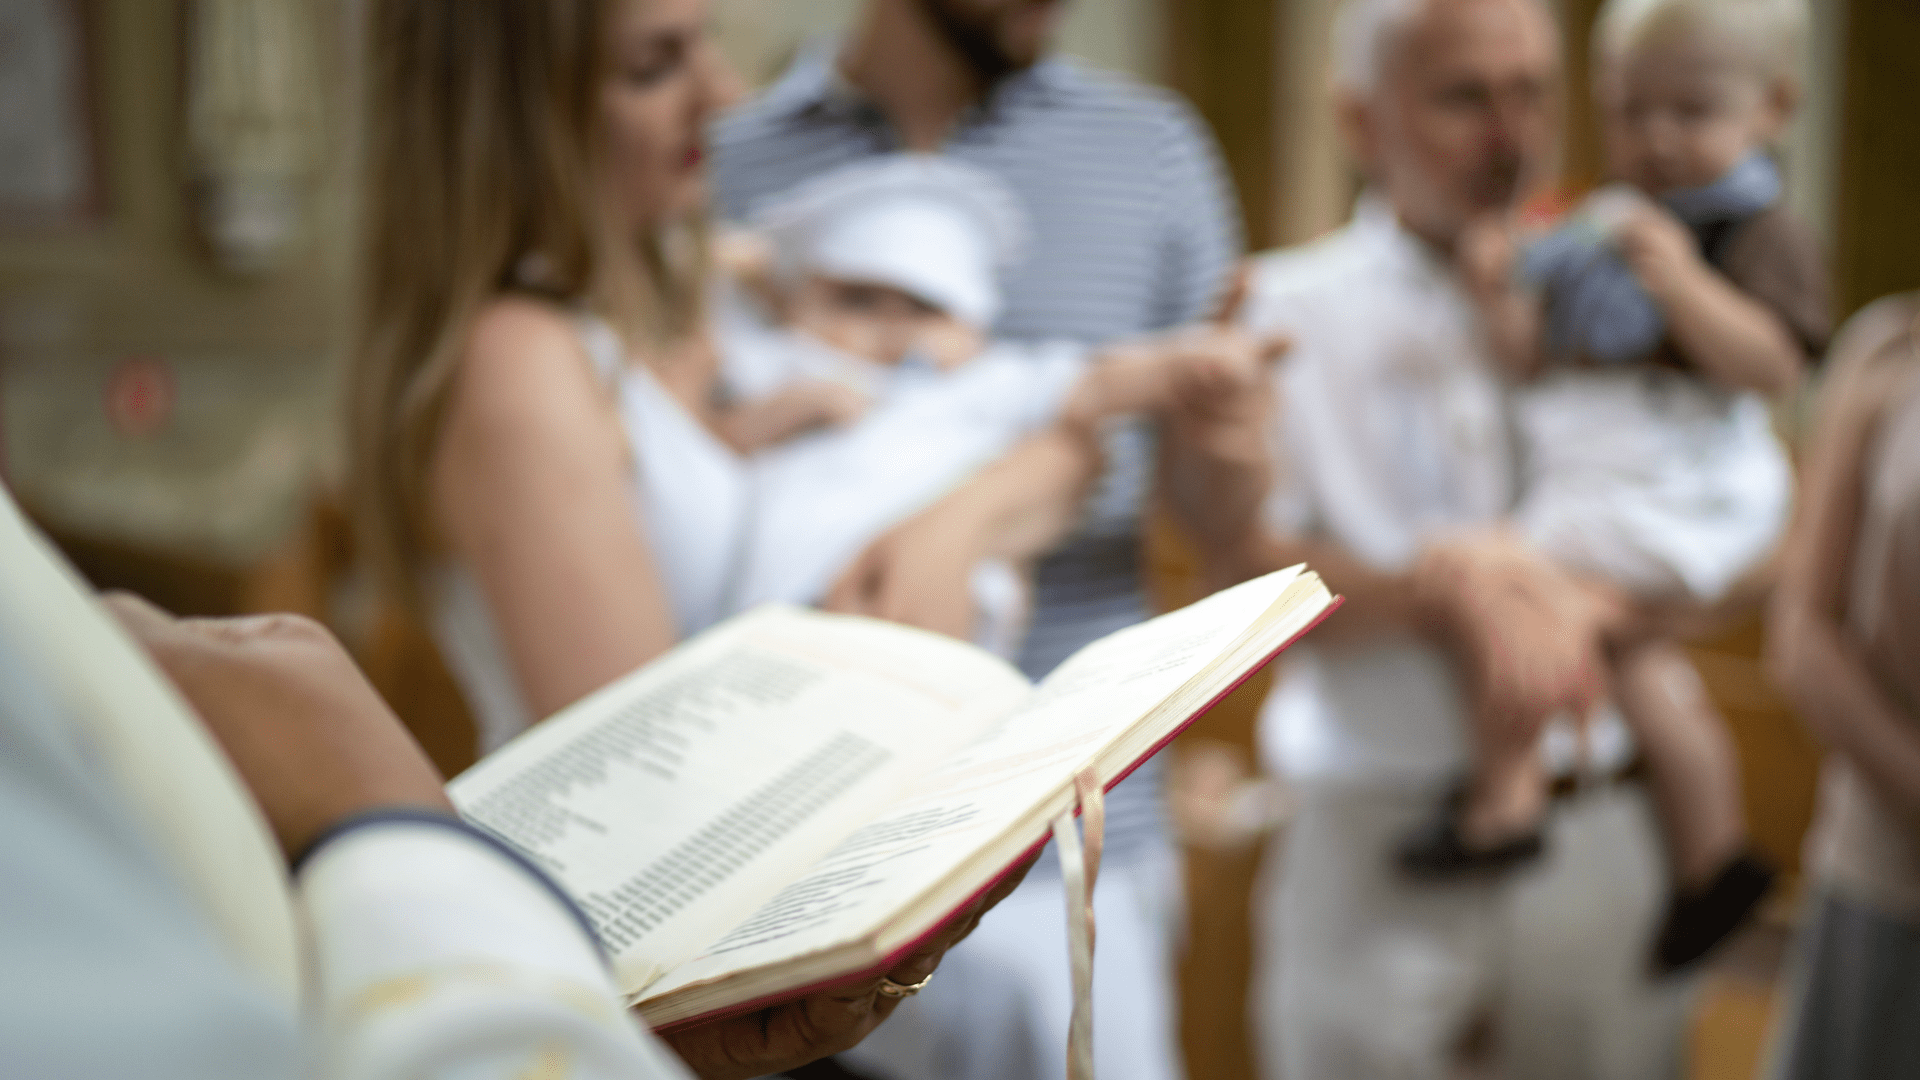 Battesimo: scelta madrina e padrino, data e chiesa